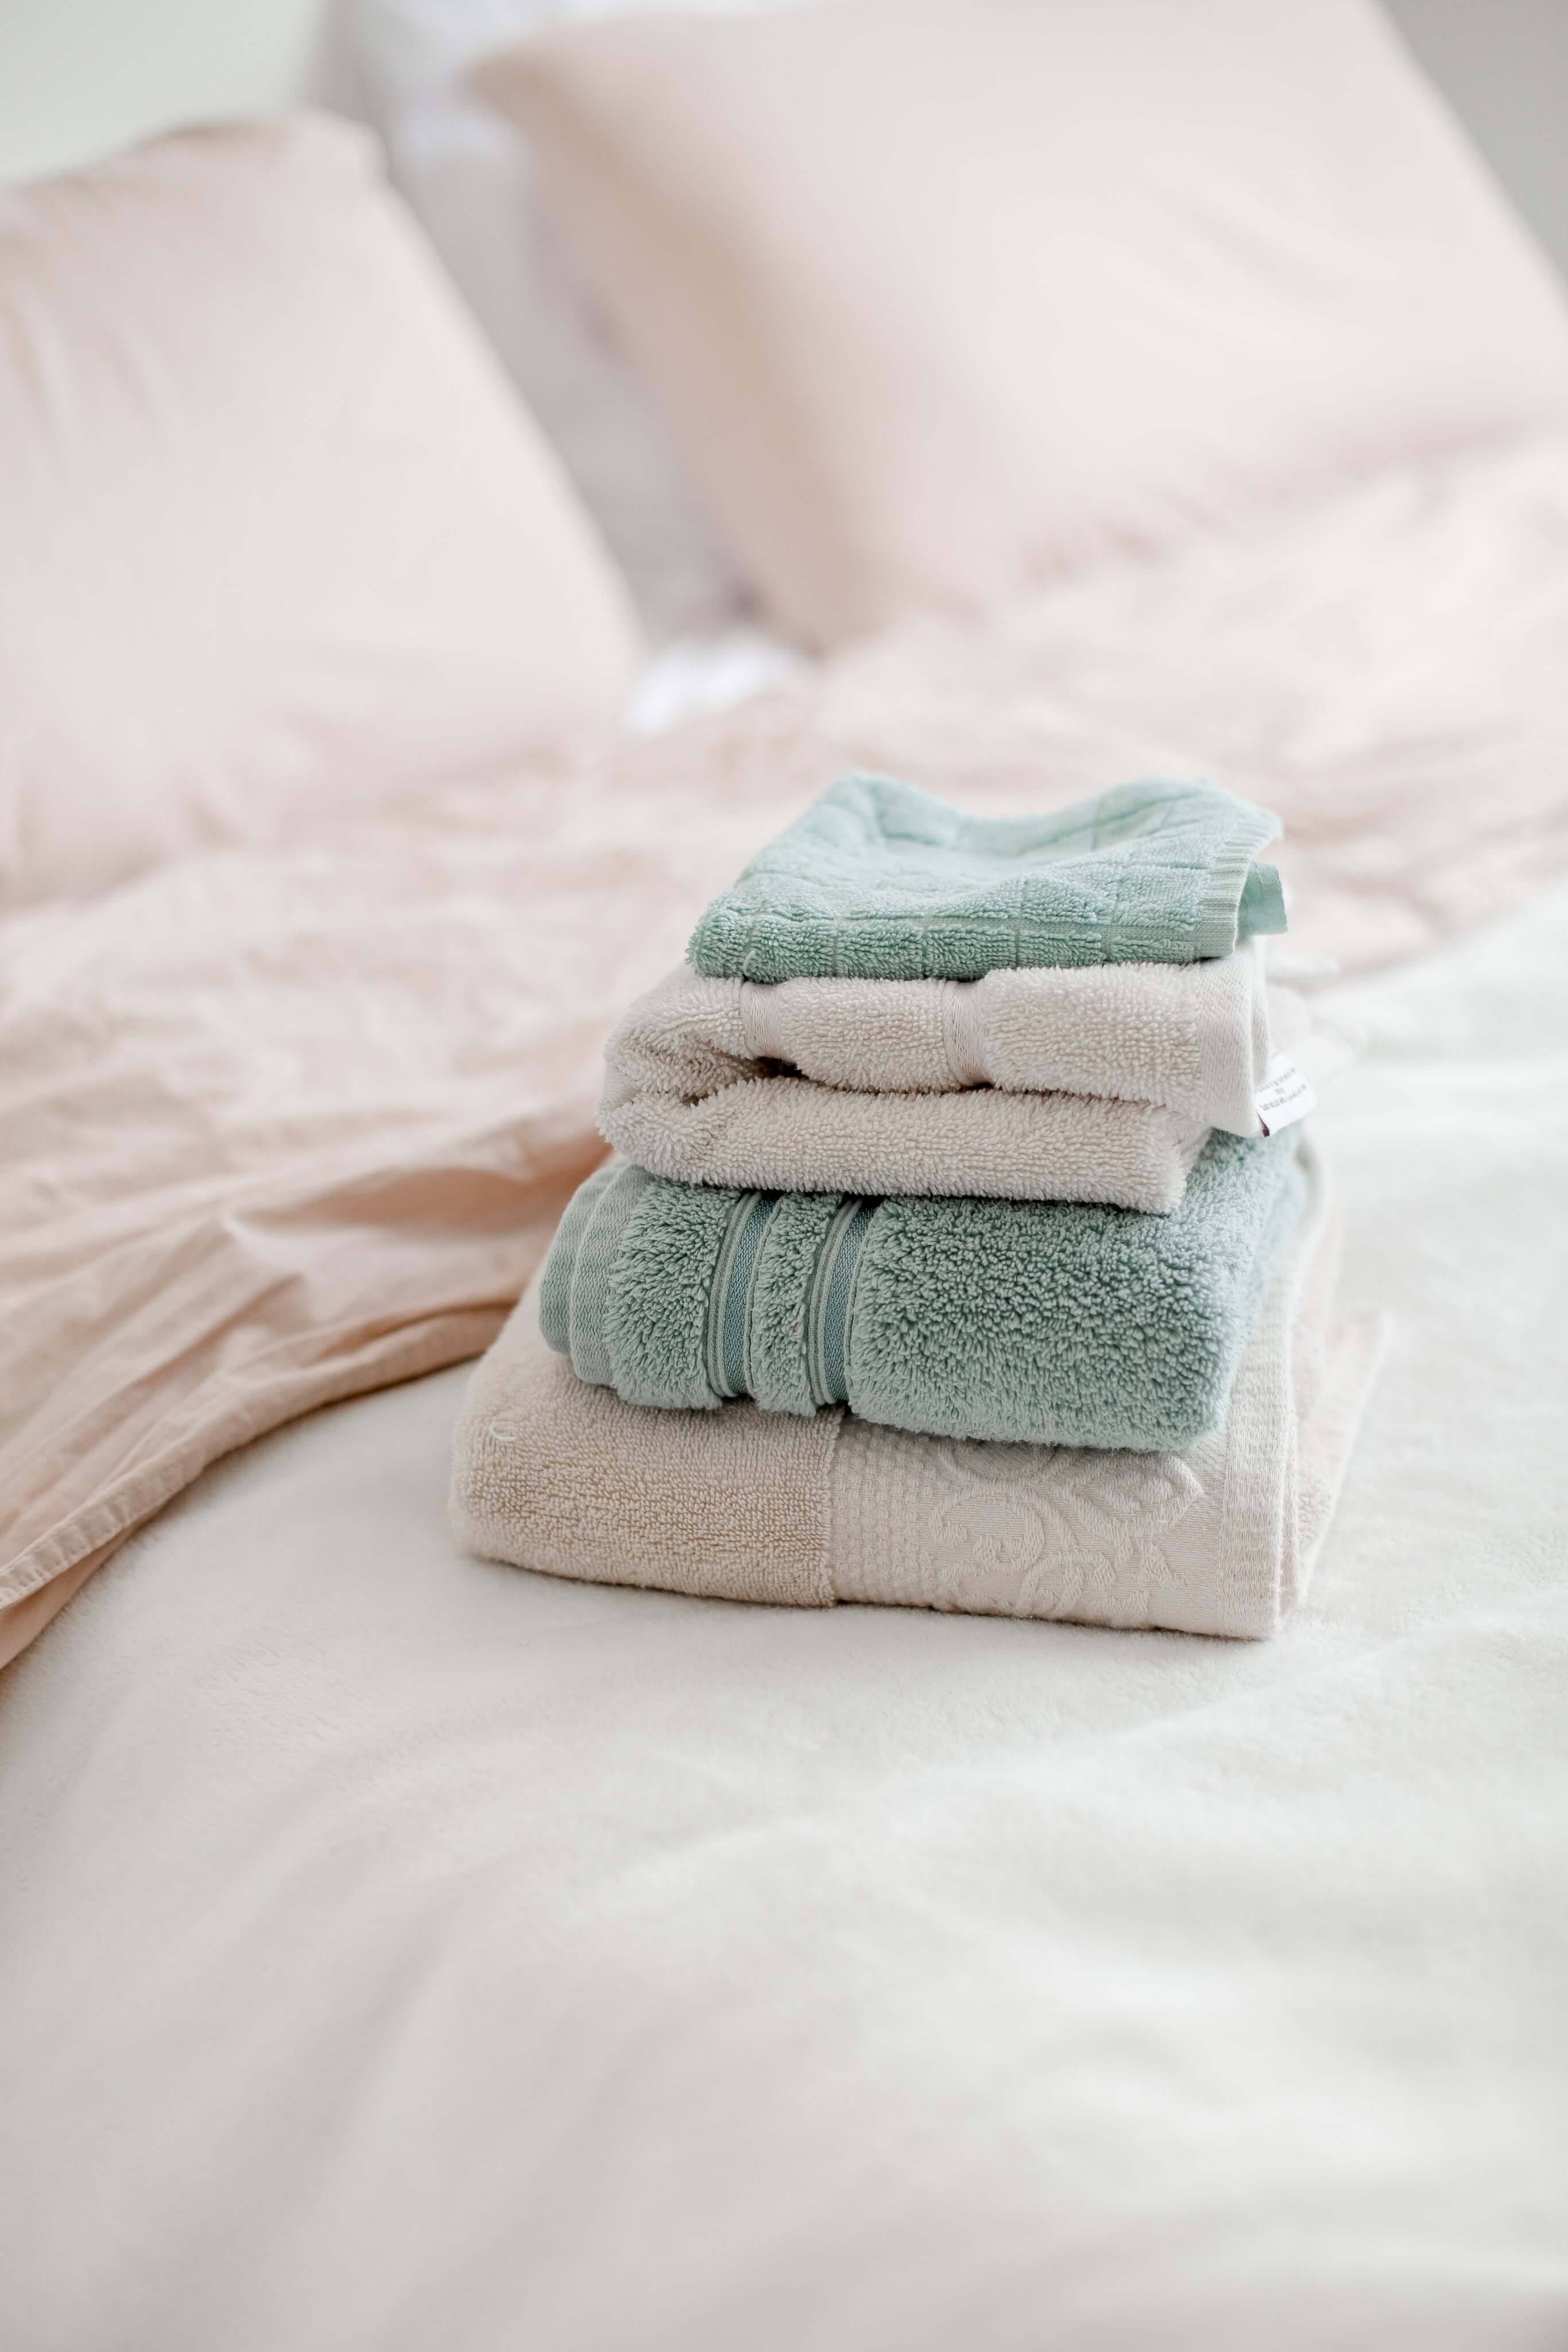 Wholesale Towels - Bulk Towels - Bath Towels - Gym Towels